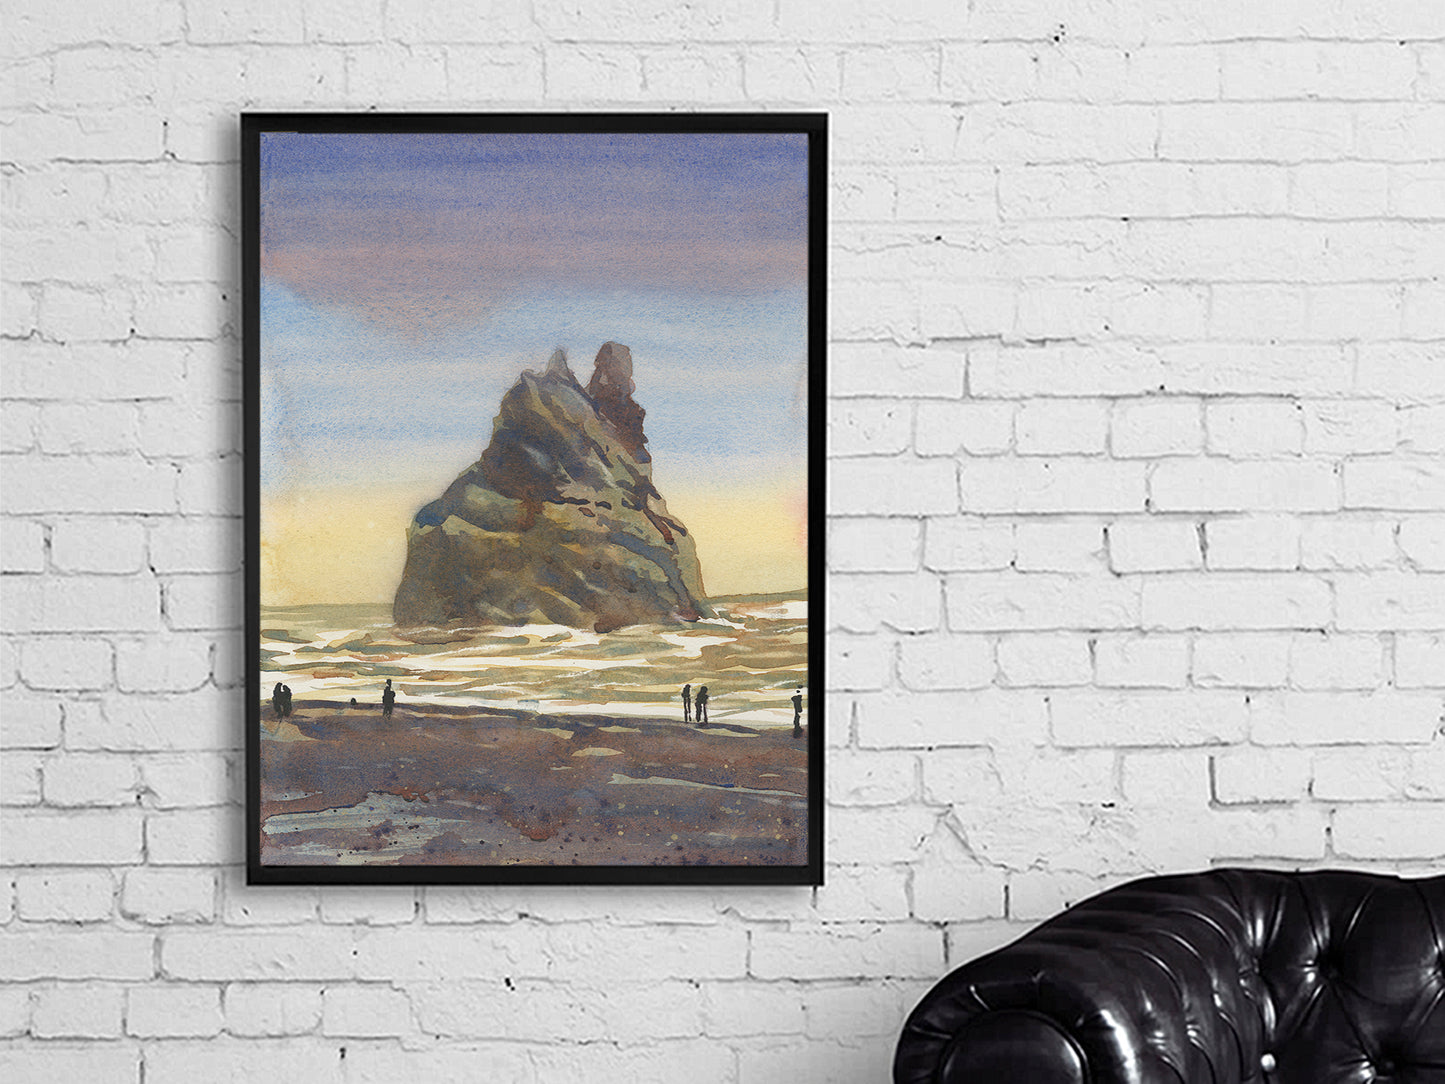 Iceland landscape painting Black Sand Beach near Vik colorful watercolor coastal art (original painting)